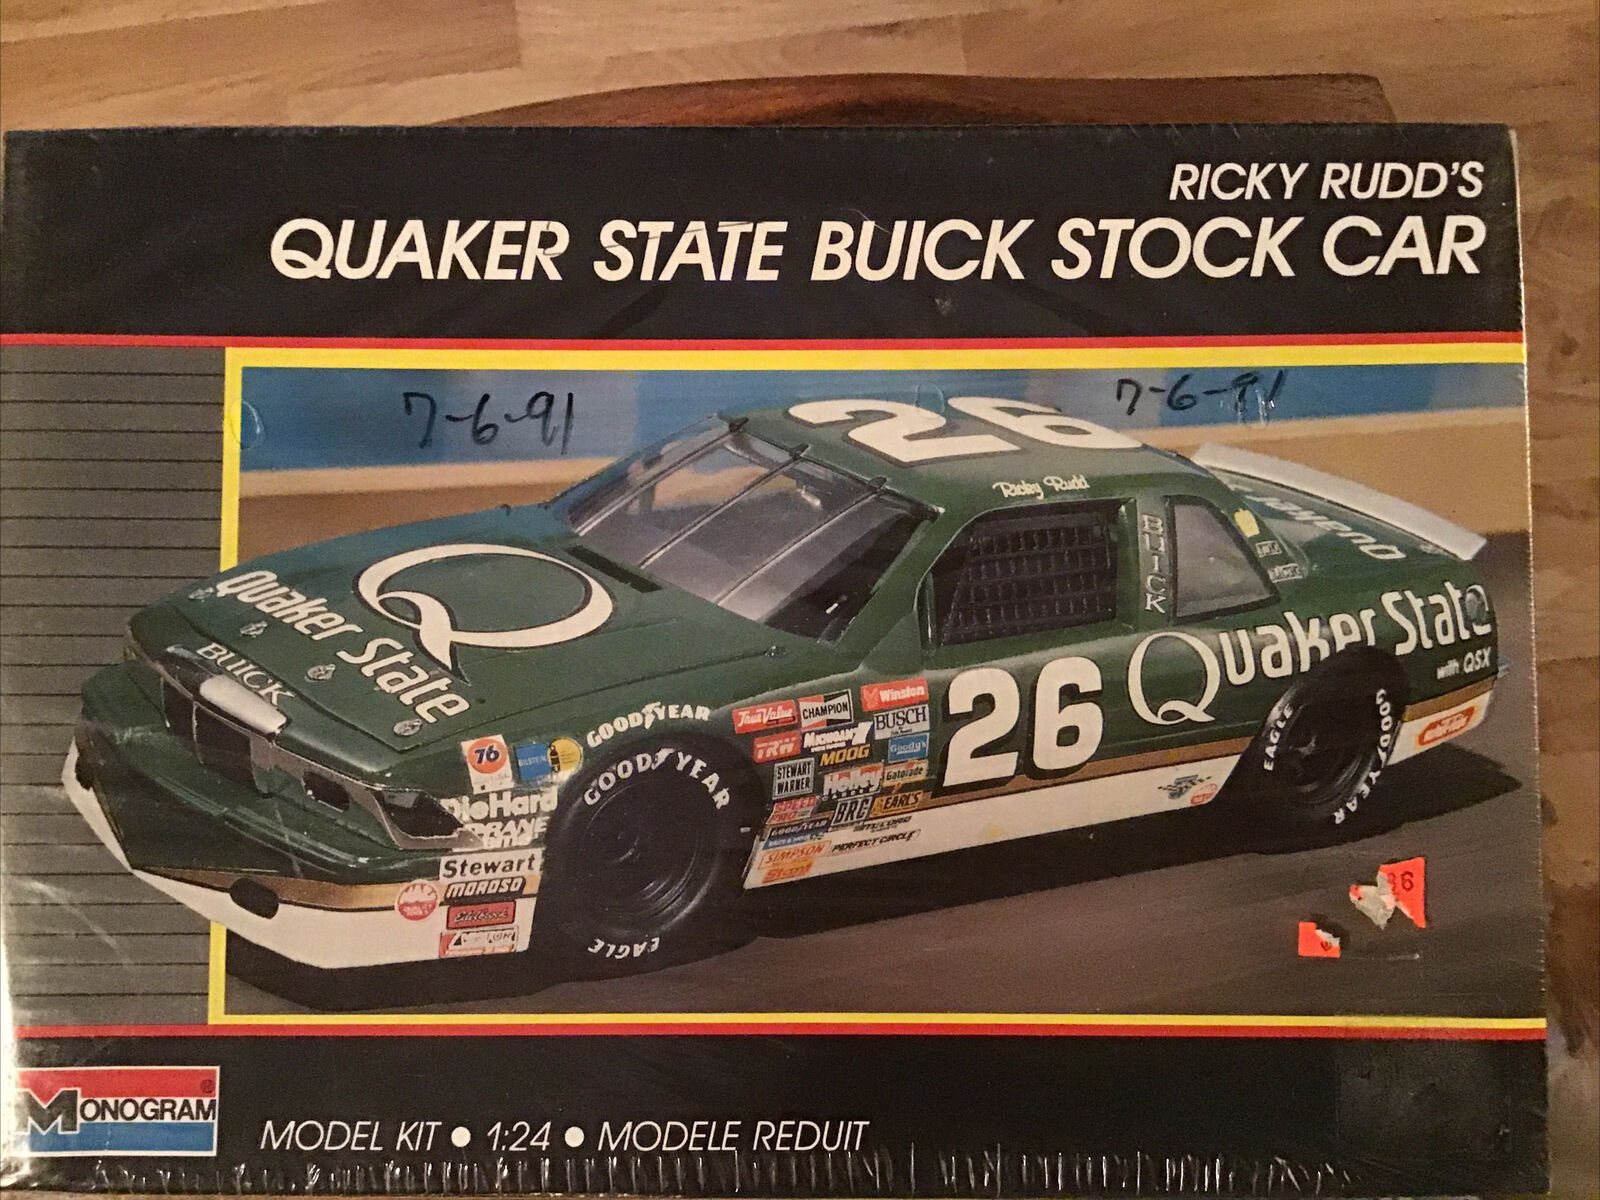 Monogram Ricky Rudd’s Quaker State Buick Stock Car